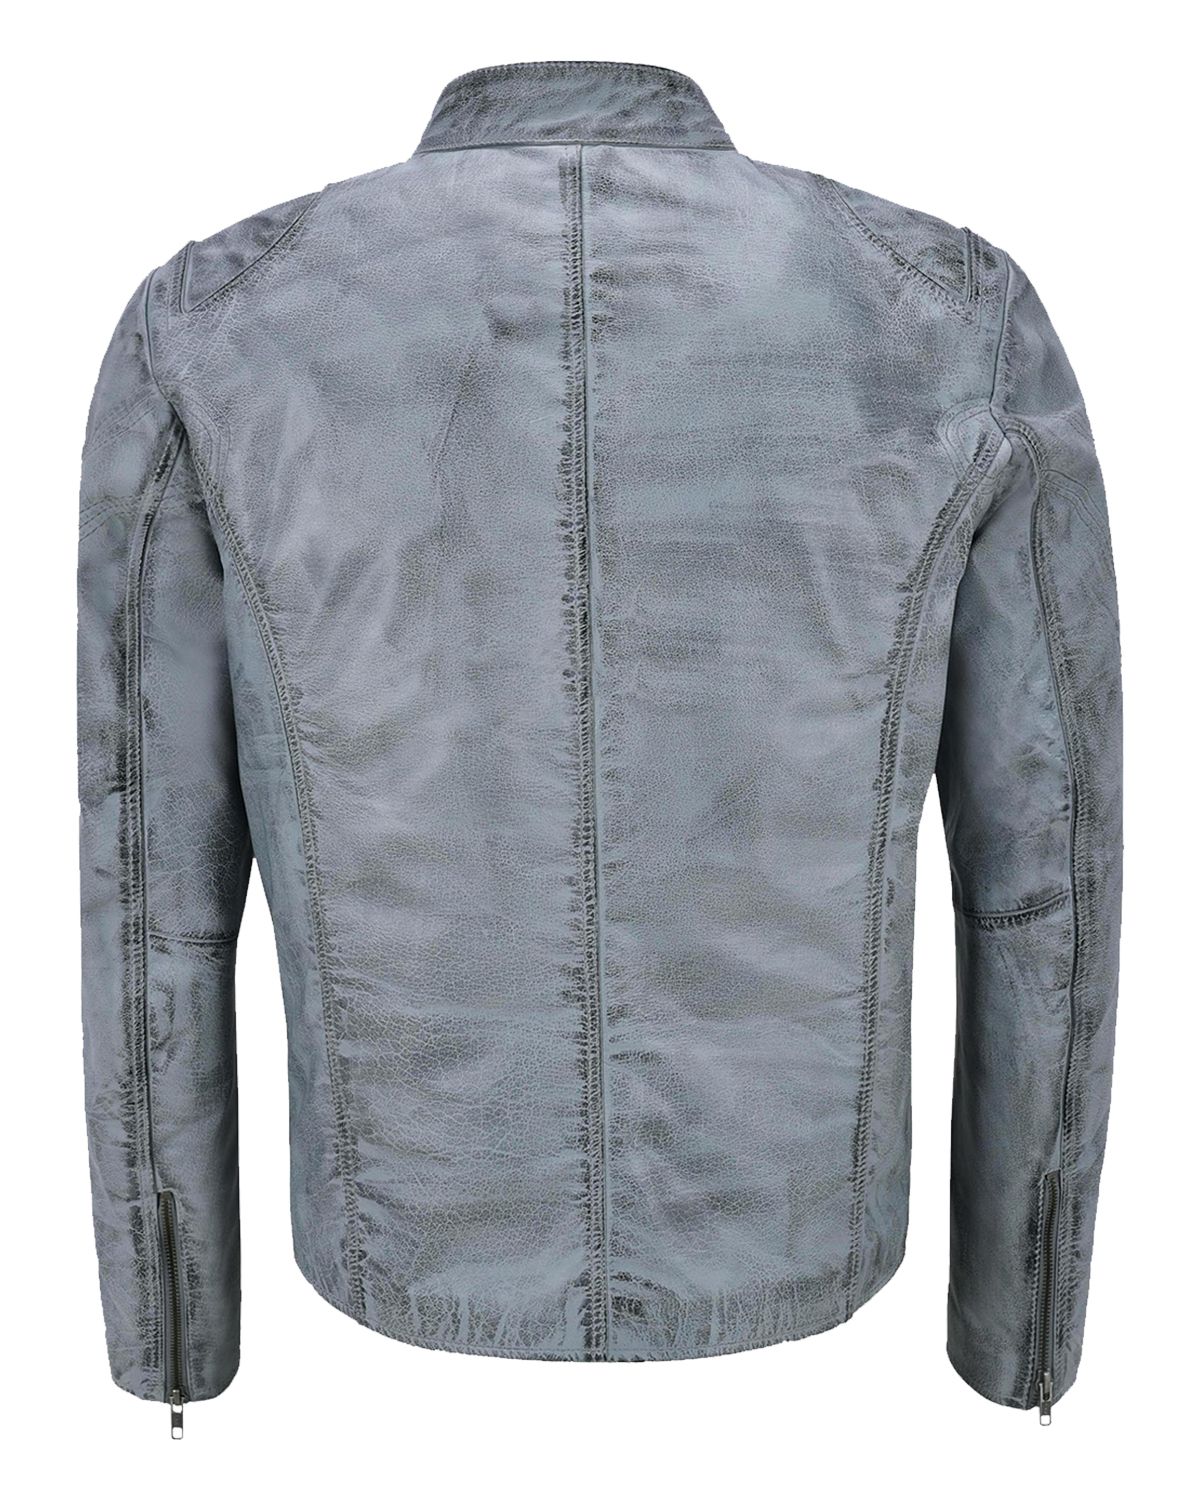 Men's Distressed Light Blue Retro Biker Leather Jacket